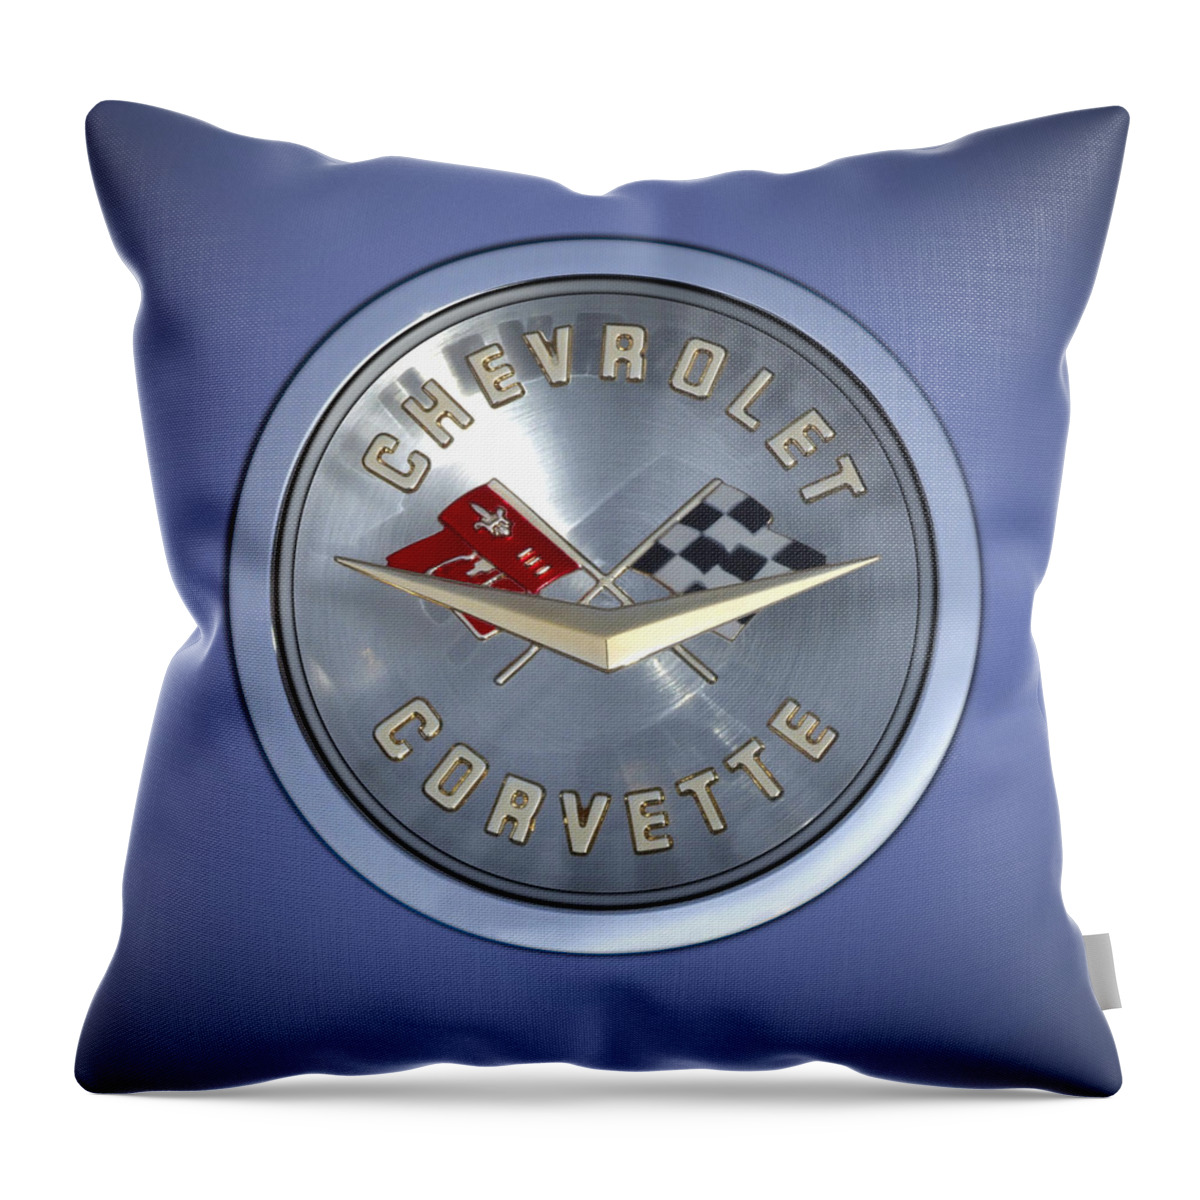 Chevrolet Corvette Throw Pillow featuring the photograph 60 Chevy Corvette Emblem by Mike McGlothlen